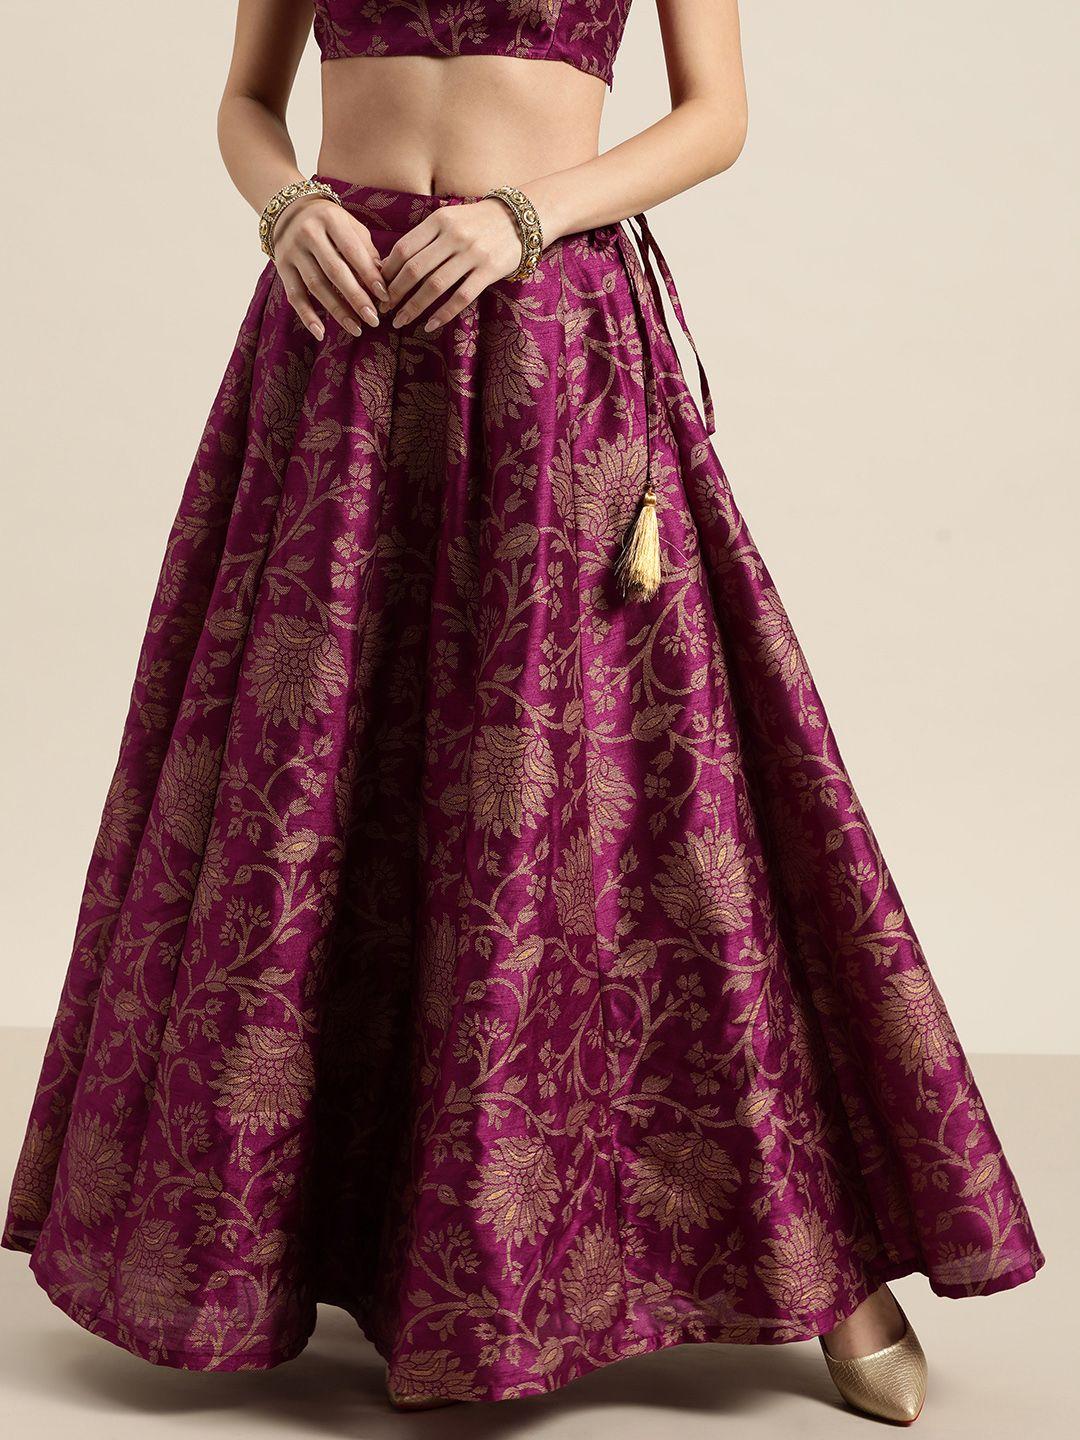 shae-by-sassafras-charming-purple-floral-jacquard-skirt